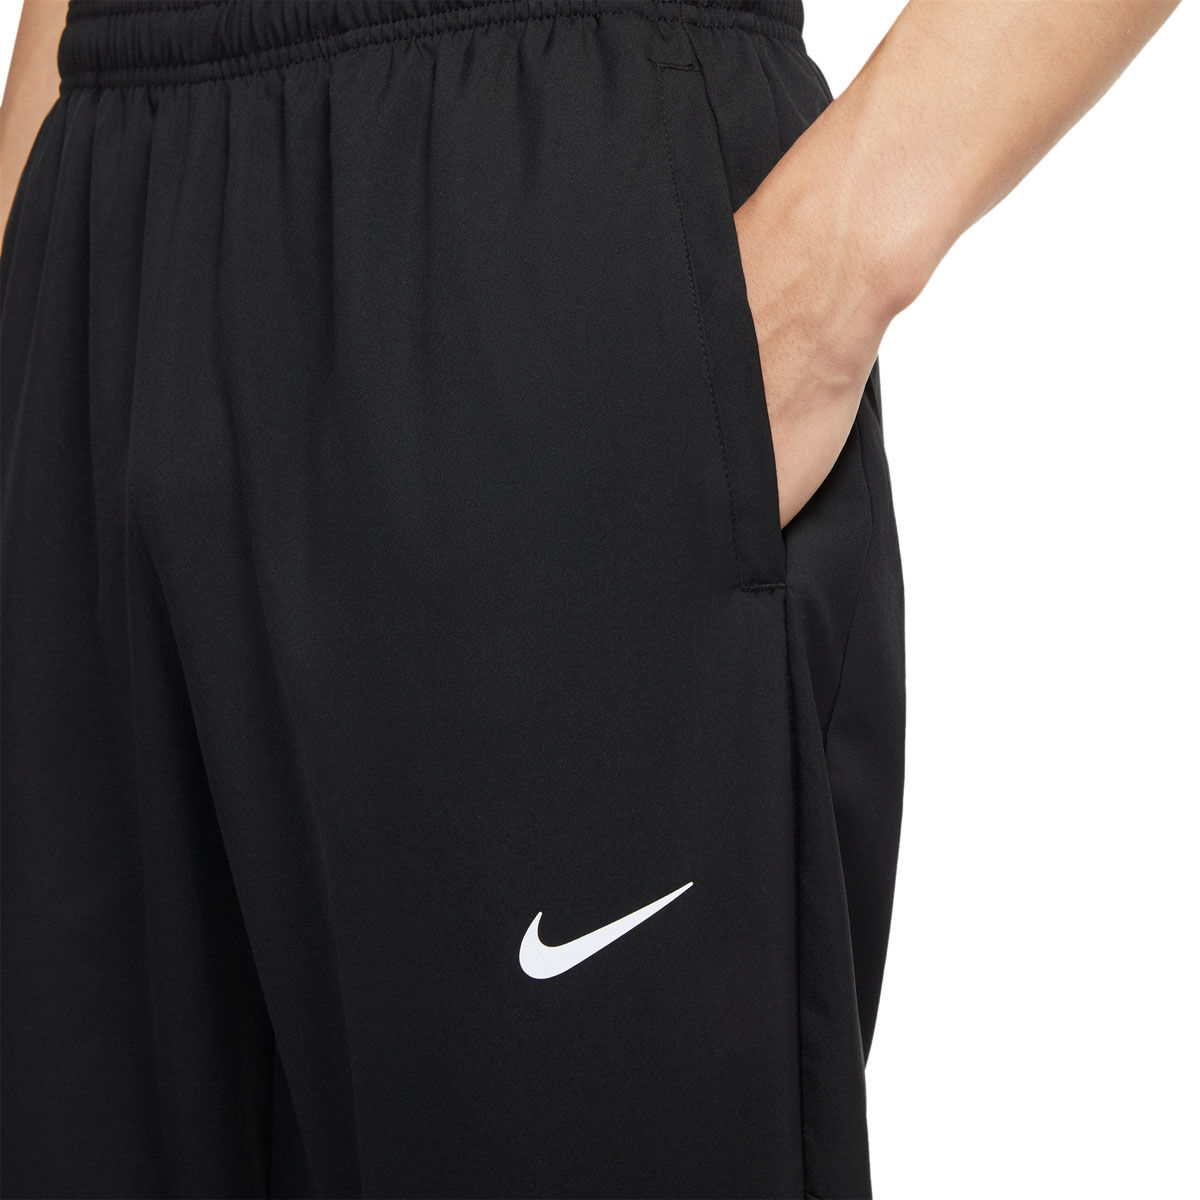 Nike StormFIT Run Division Phenom Elite Flash Running Trousers DD6127010  A77  eBay